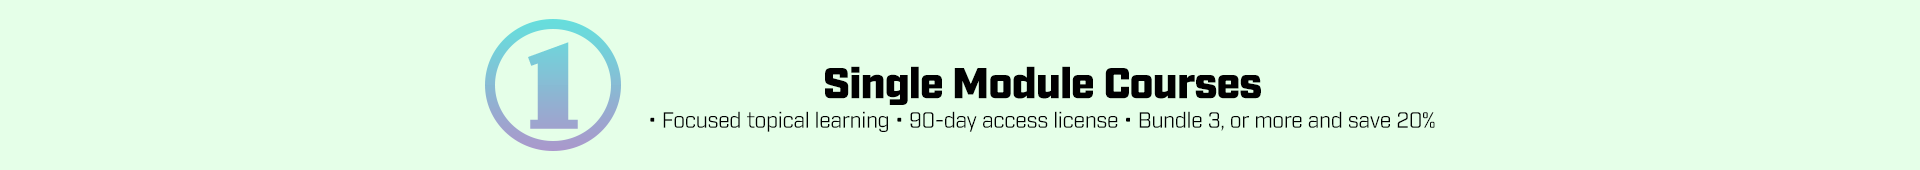 Online Single Module Courses